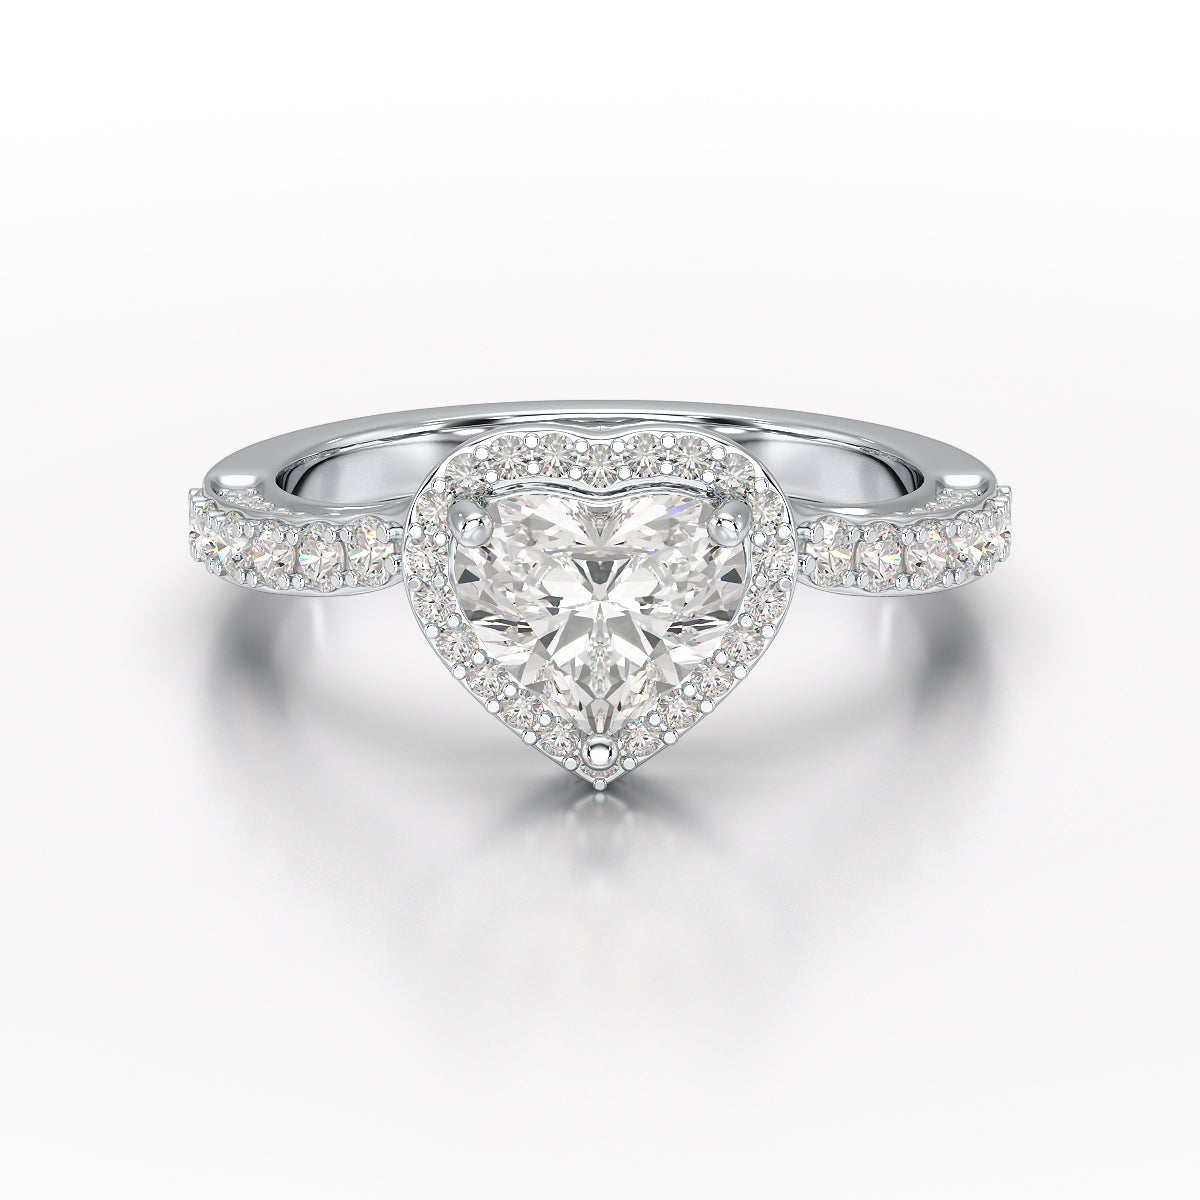 1.73 CT Heart Cut Lab Diamond Engagement Ring